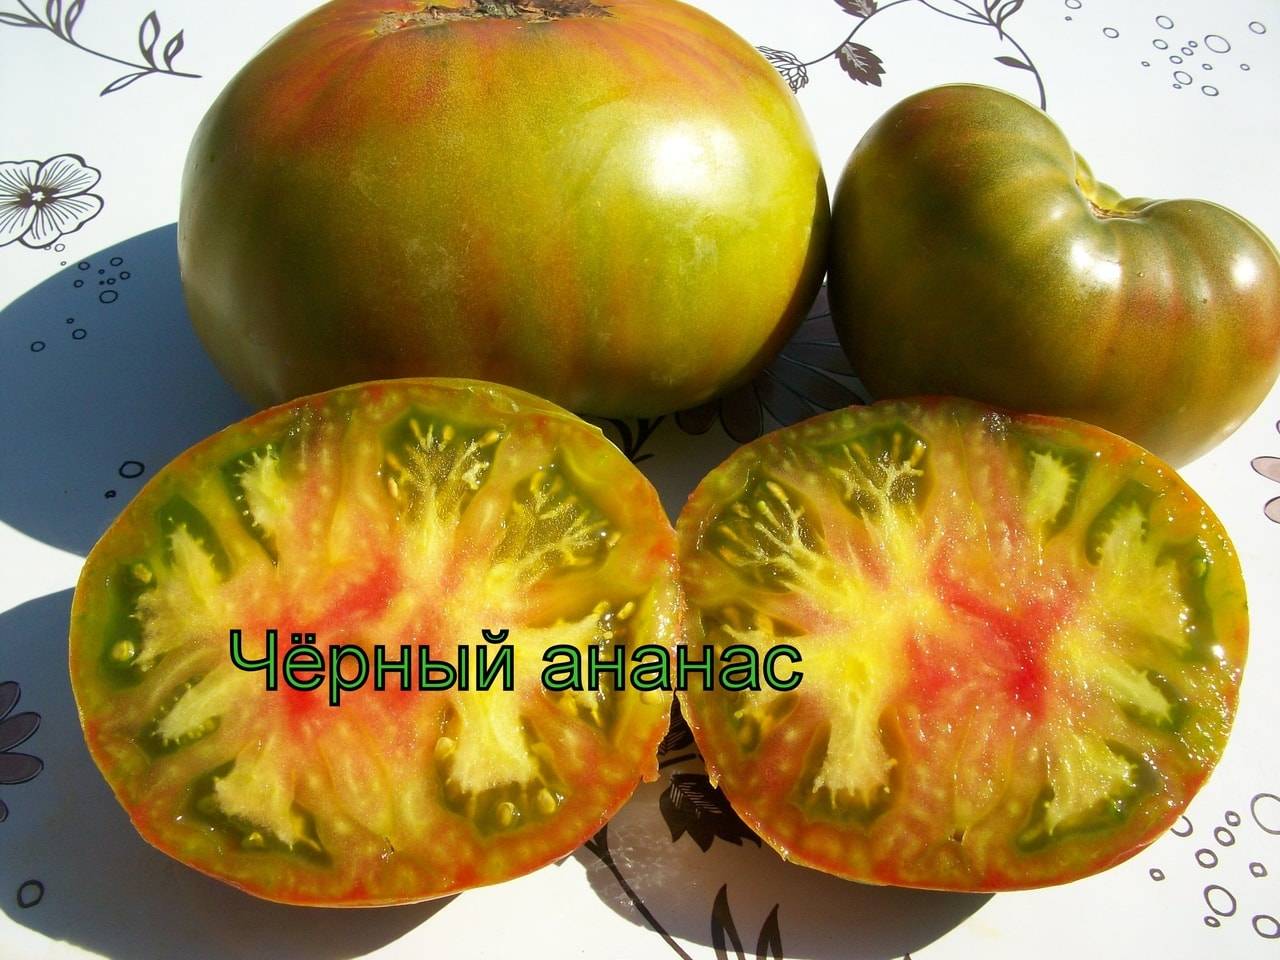 Томат черный ананас: описание и характеристика сорта с фото